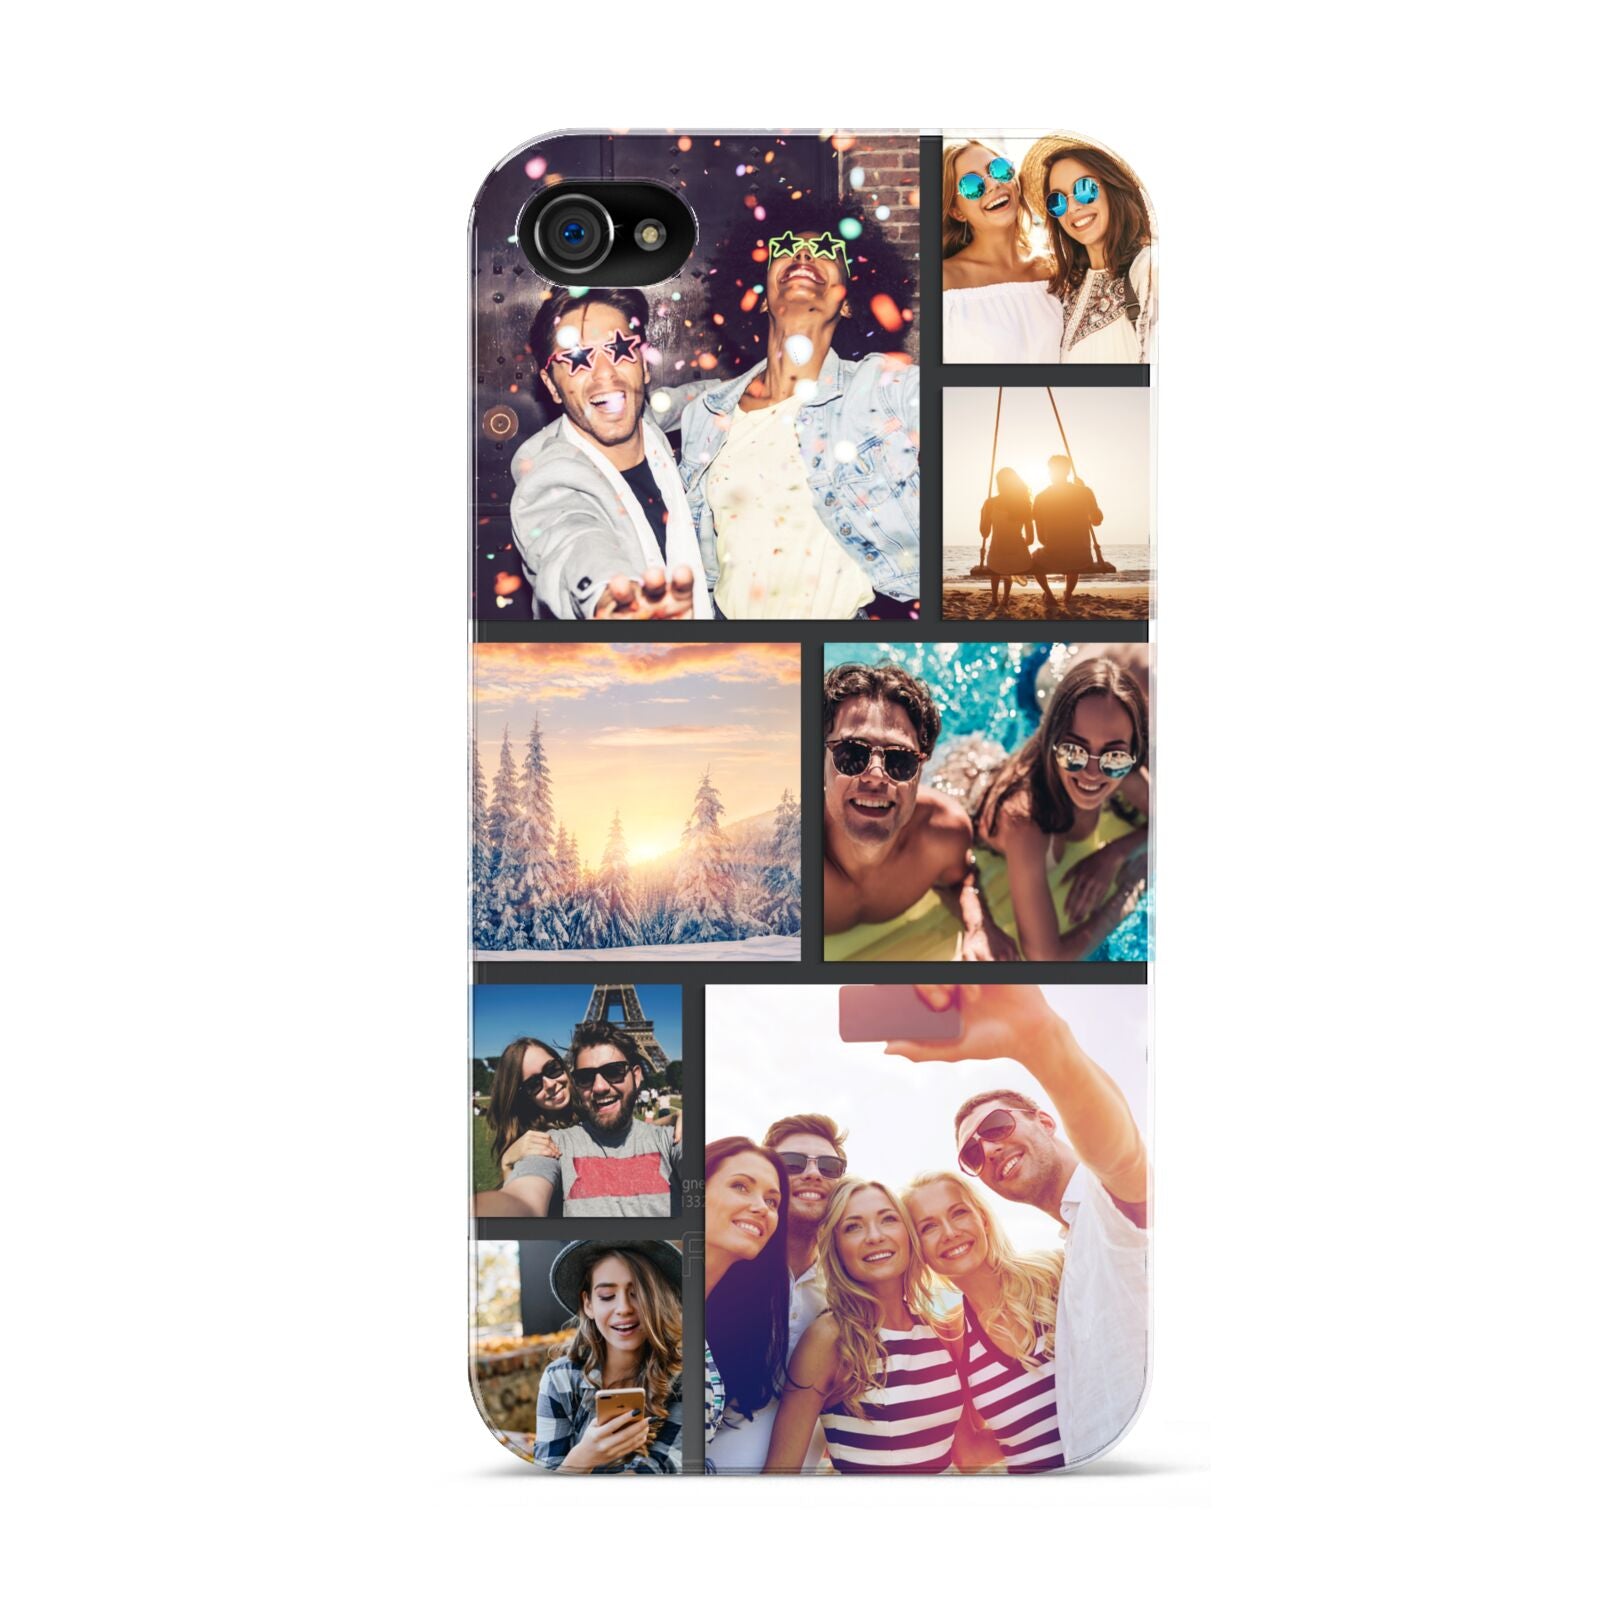 Photo Collage Apple iPhone 4s Case